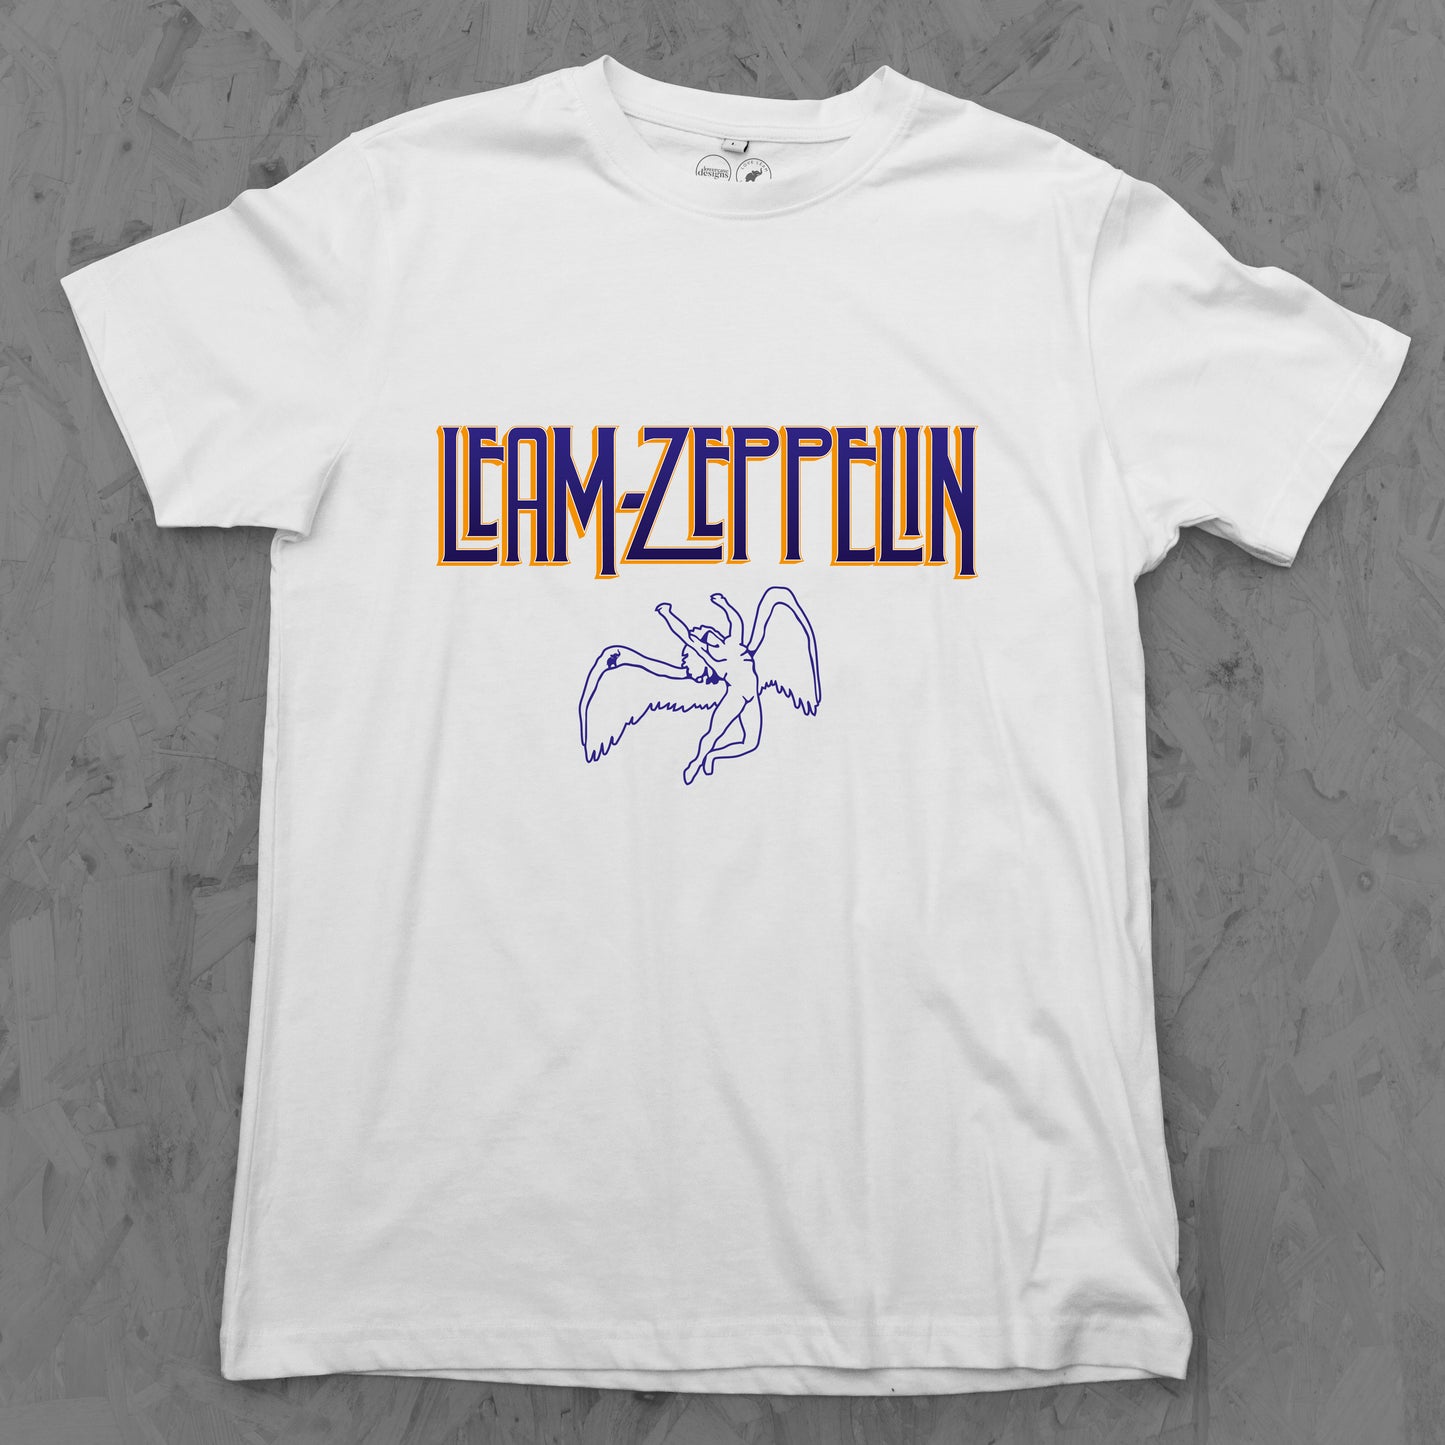 Leam Zeppelin